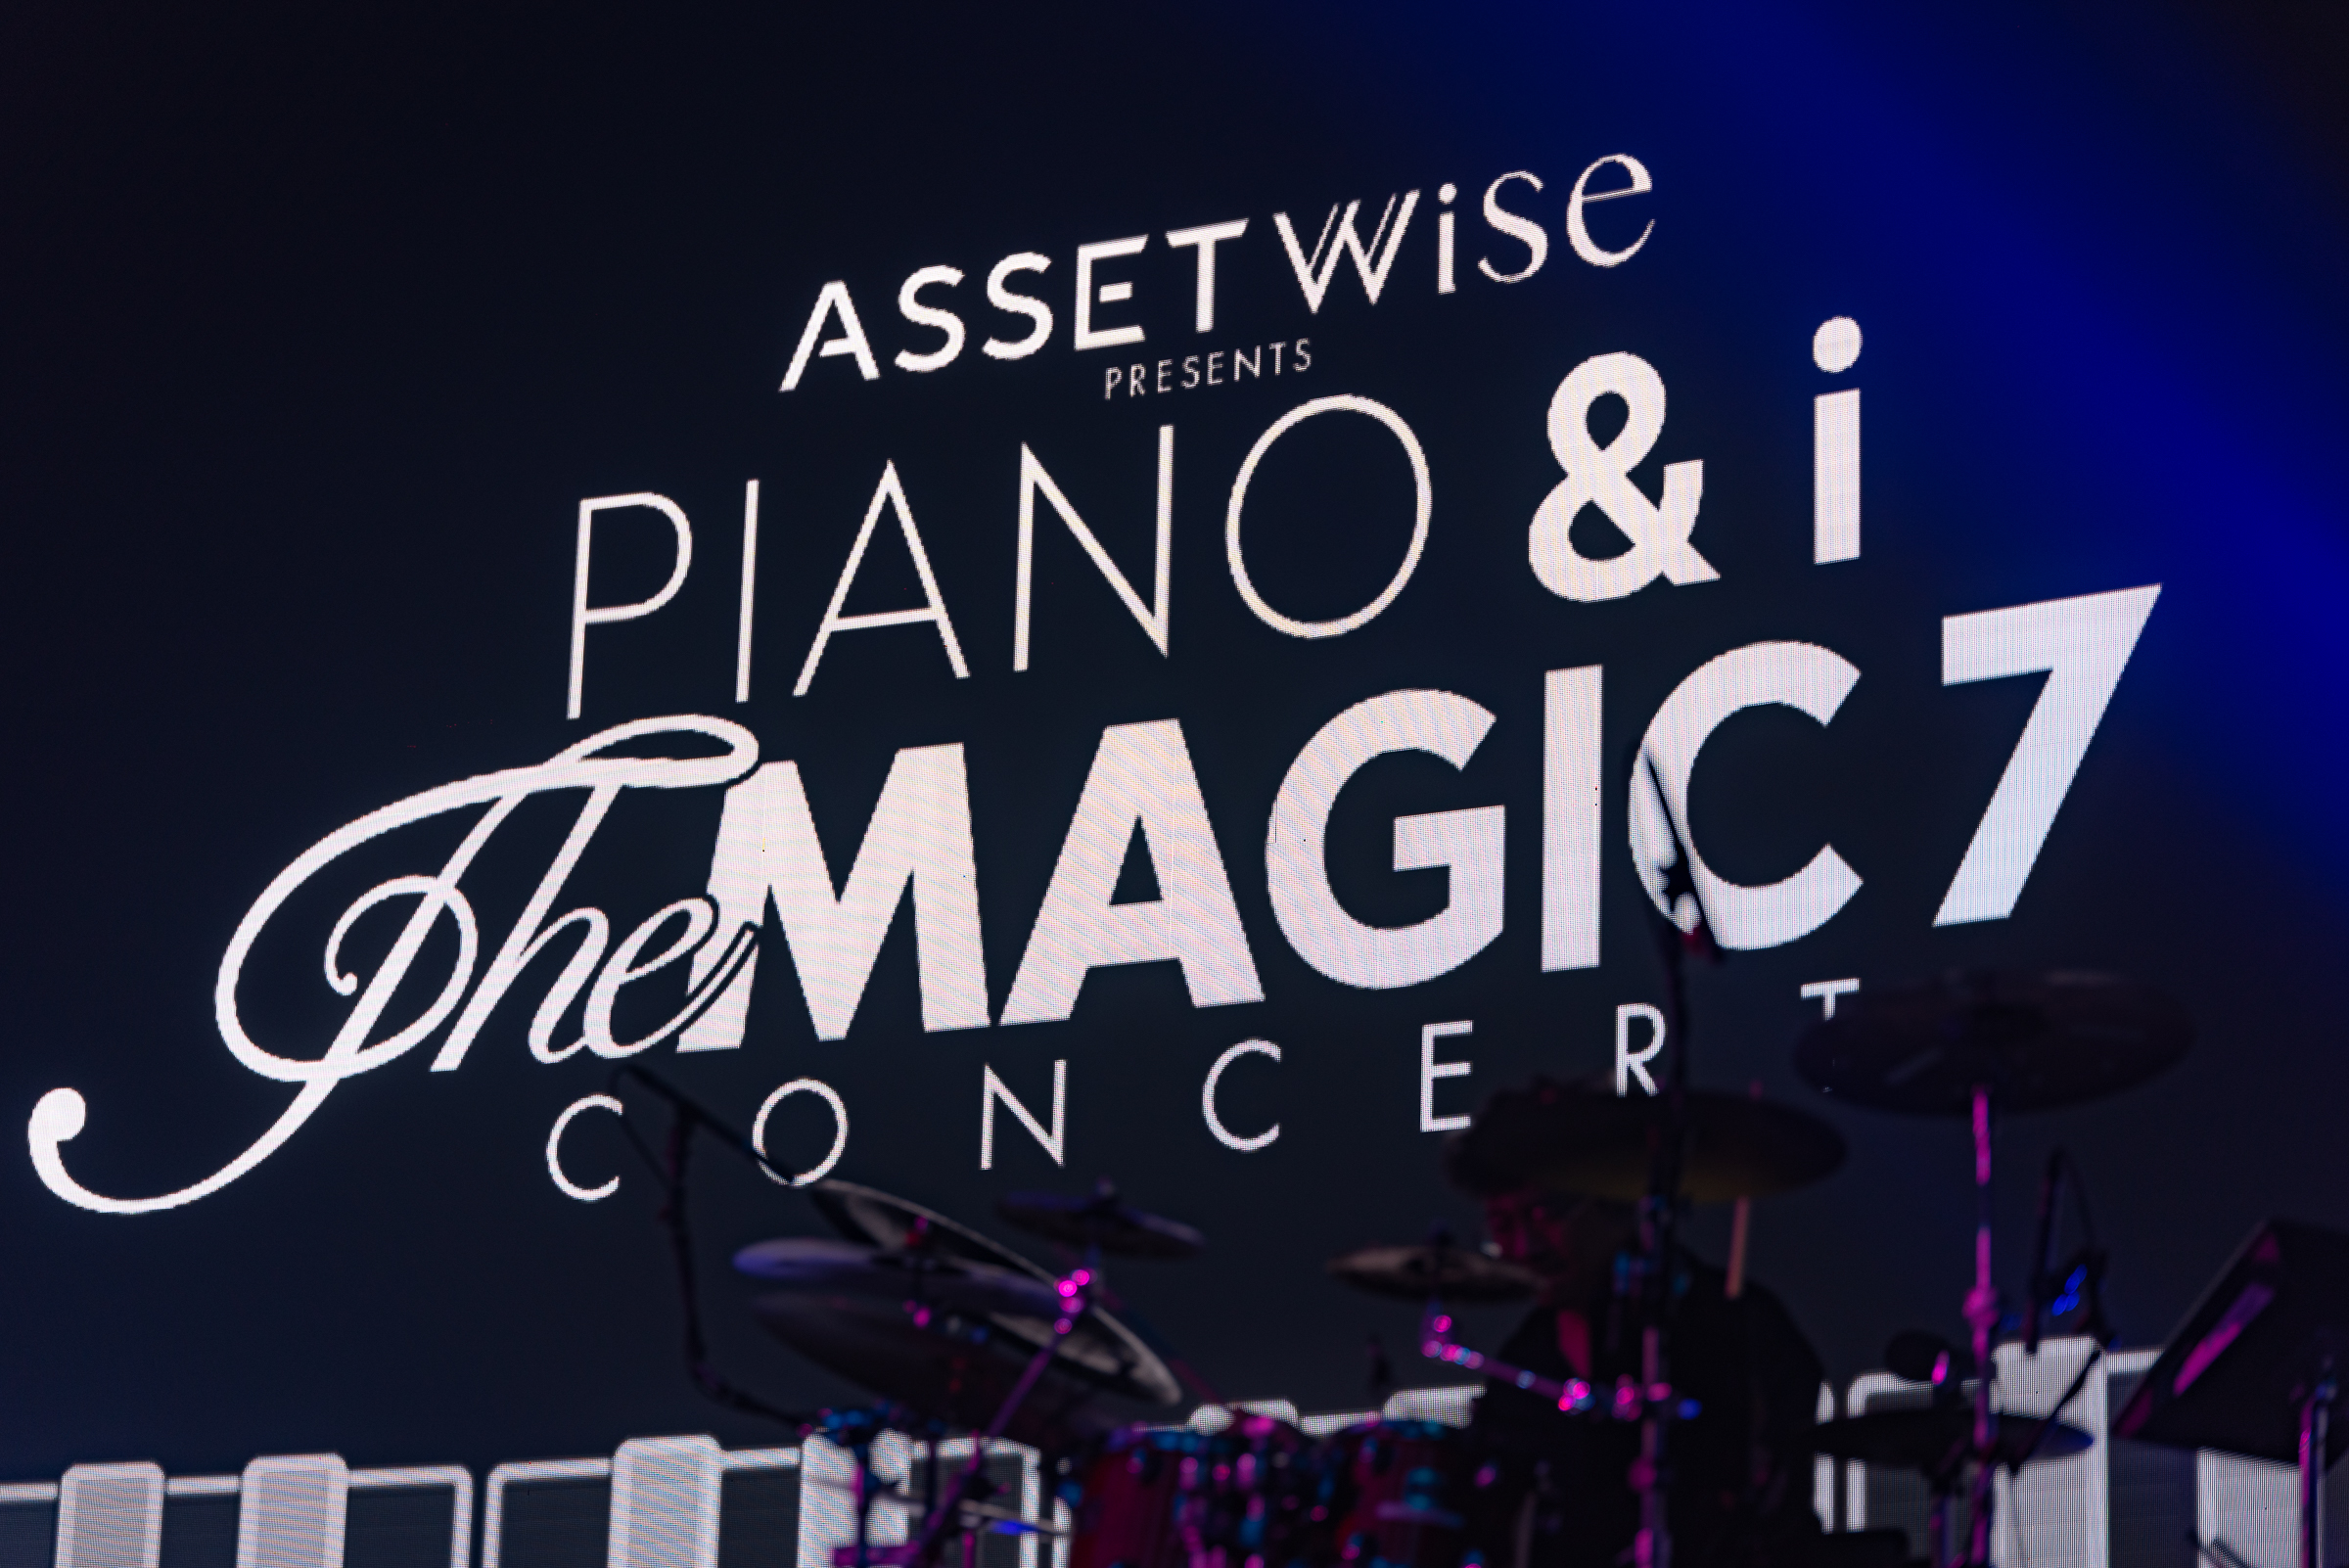 “ASSETWISE Presents PIANO&i The Magic 7” สะกดคนดูให้เคลิ้ม สมชื่อคอนเสิร์ตพาแฟน ๆ หูเคลือบทองกันทั้งฮอลล์